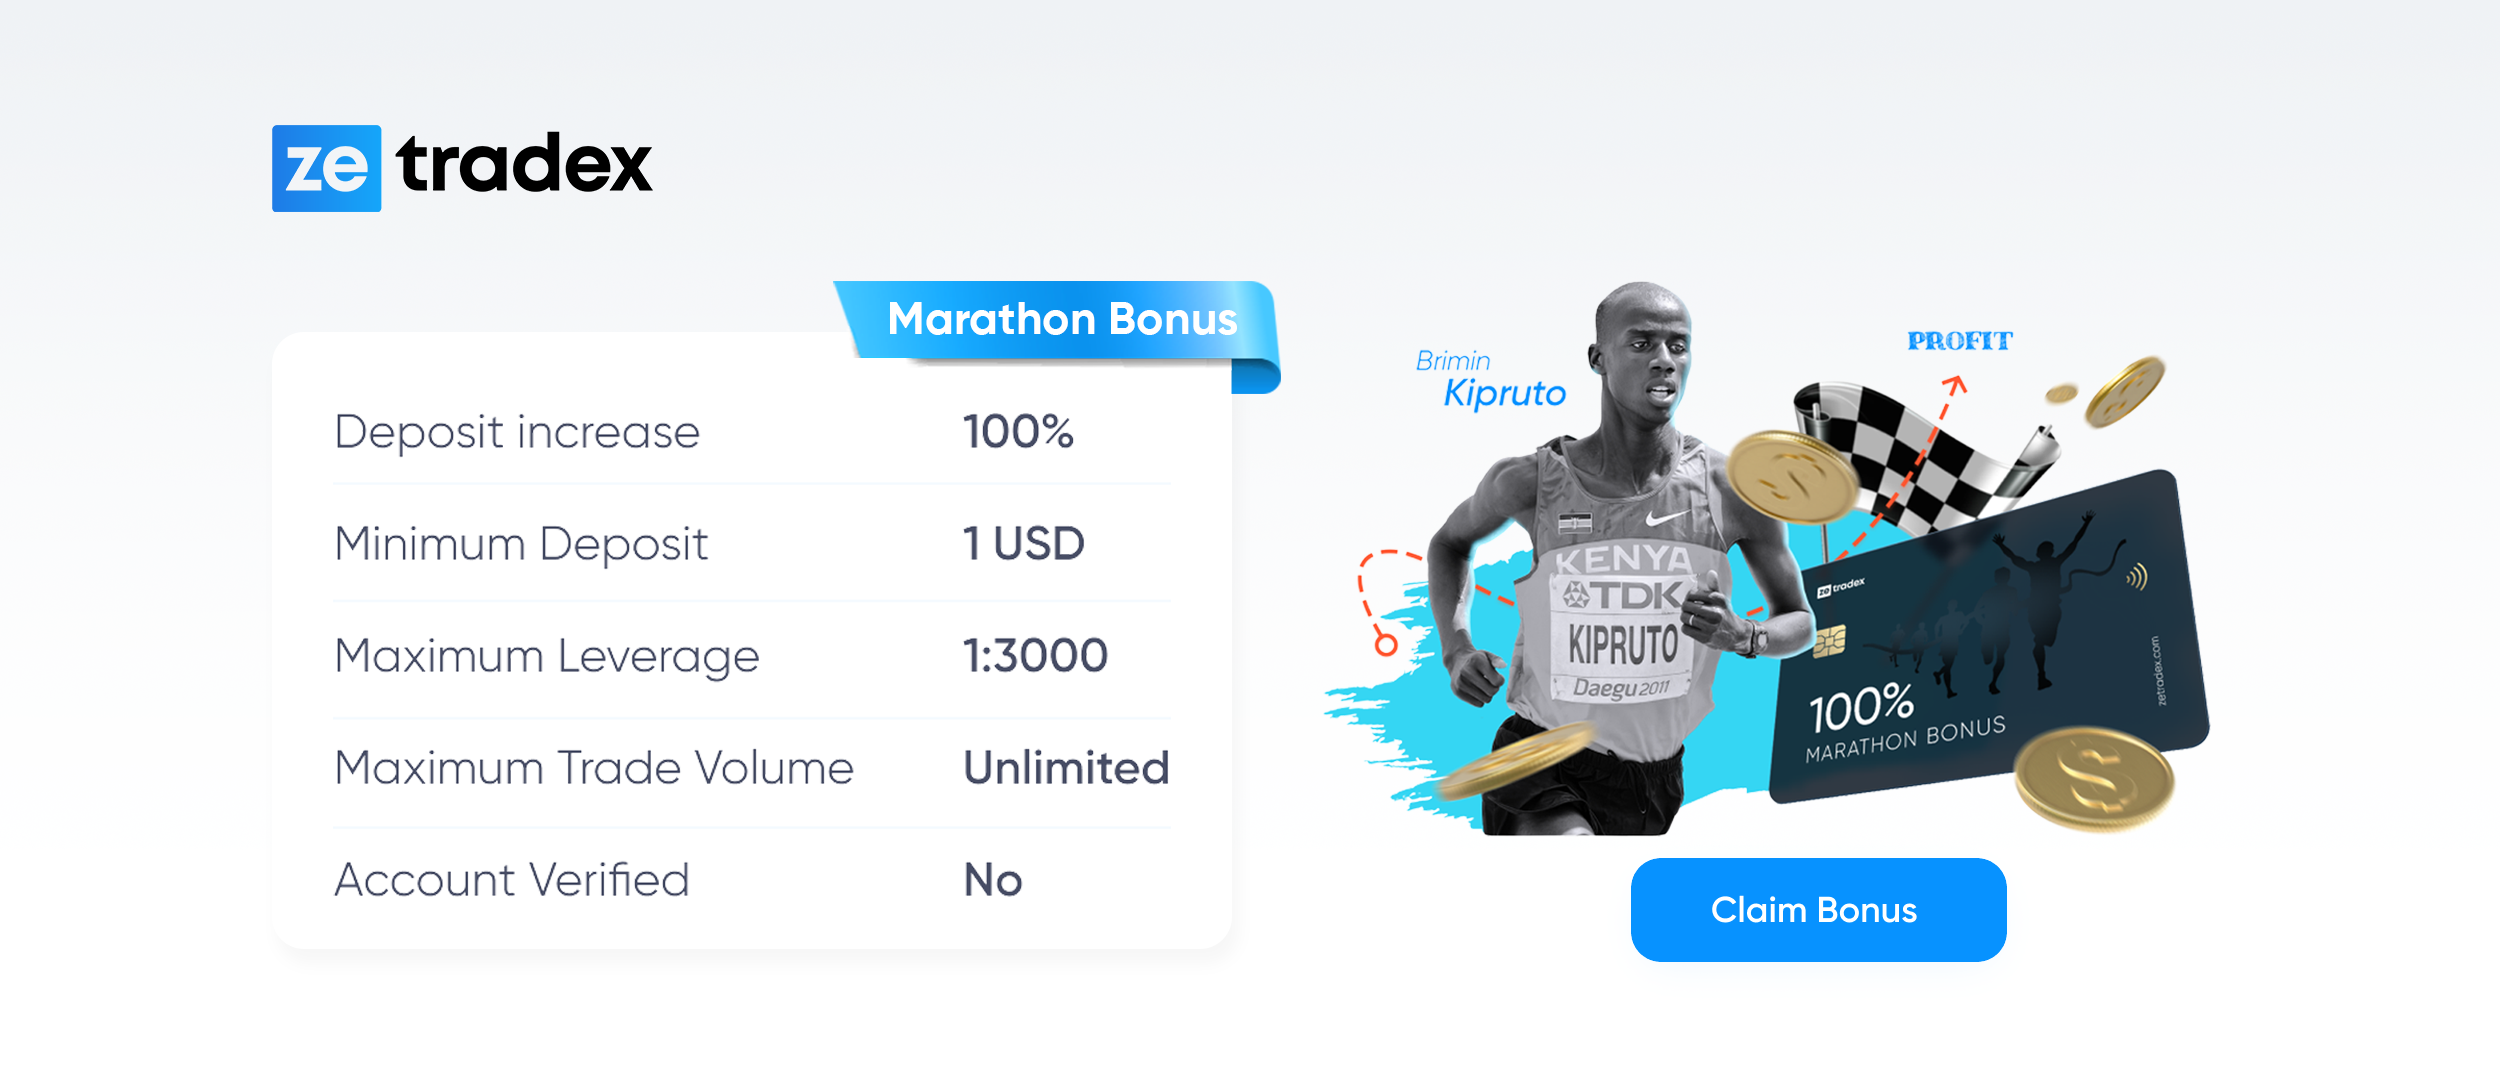 Marathon Bonus 100% Zetradex